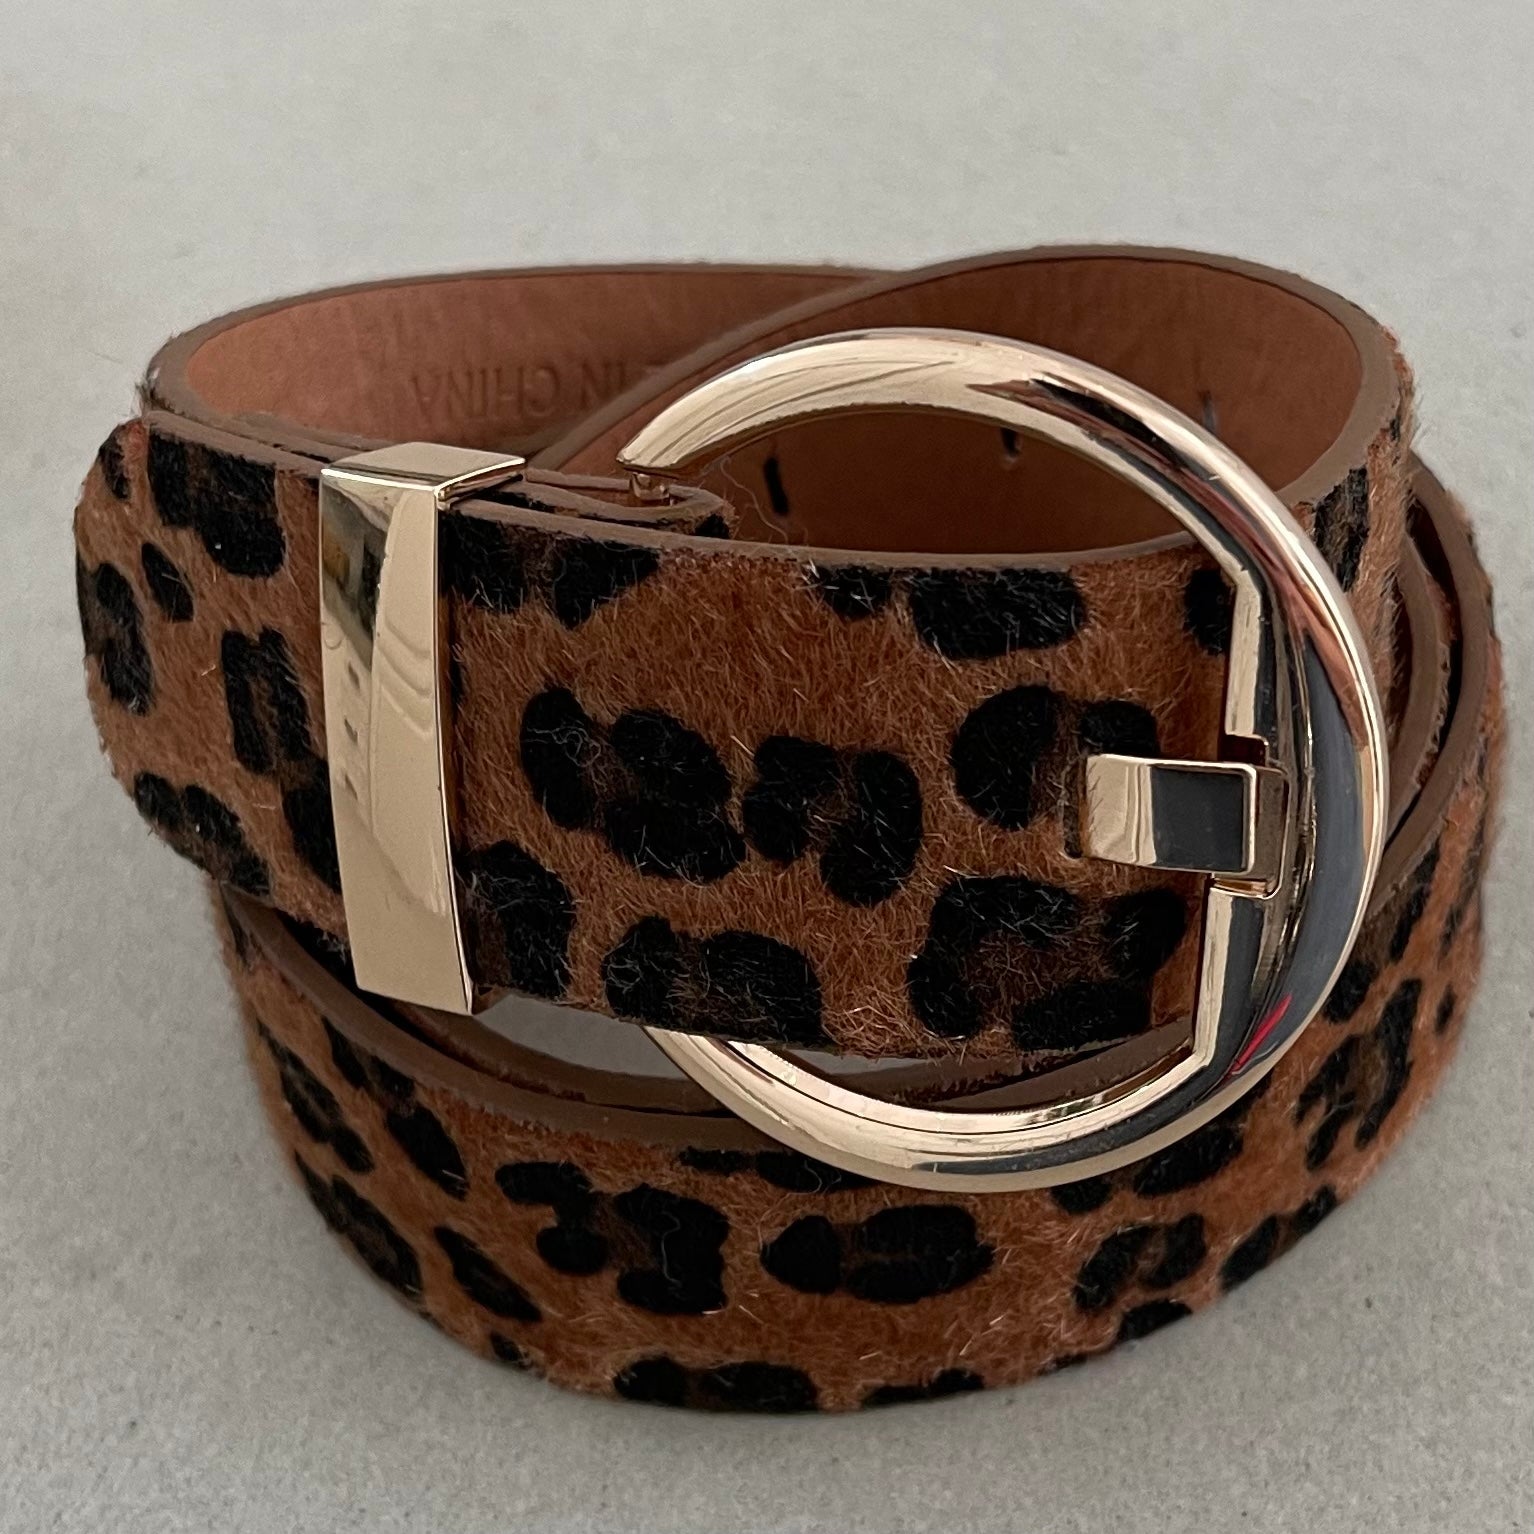 Women's leopard print belt with gold buckle